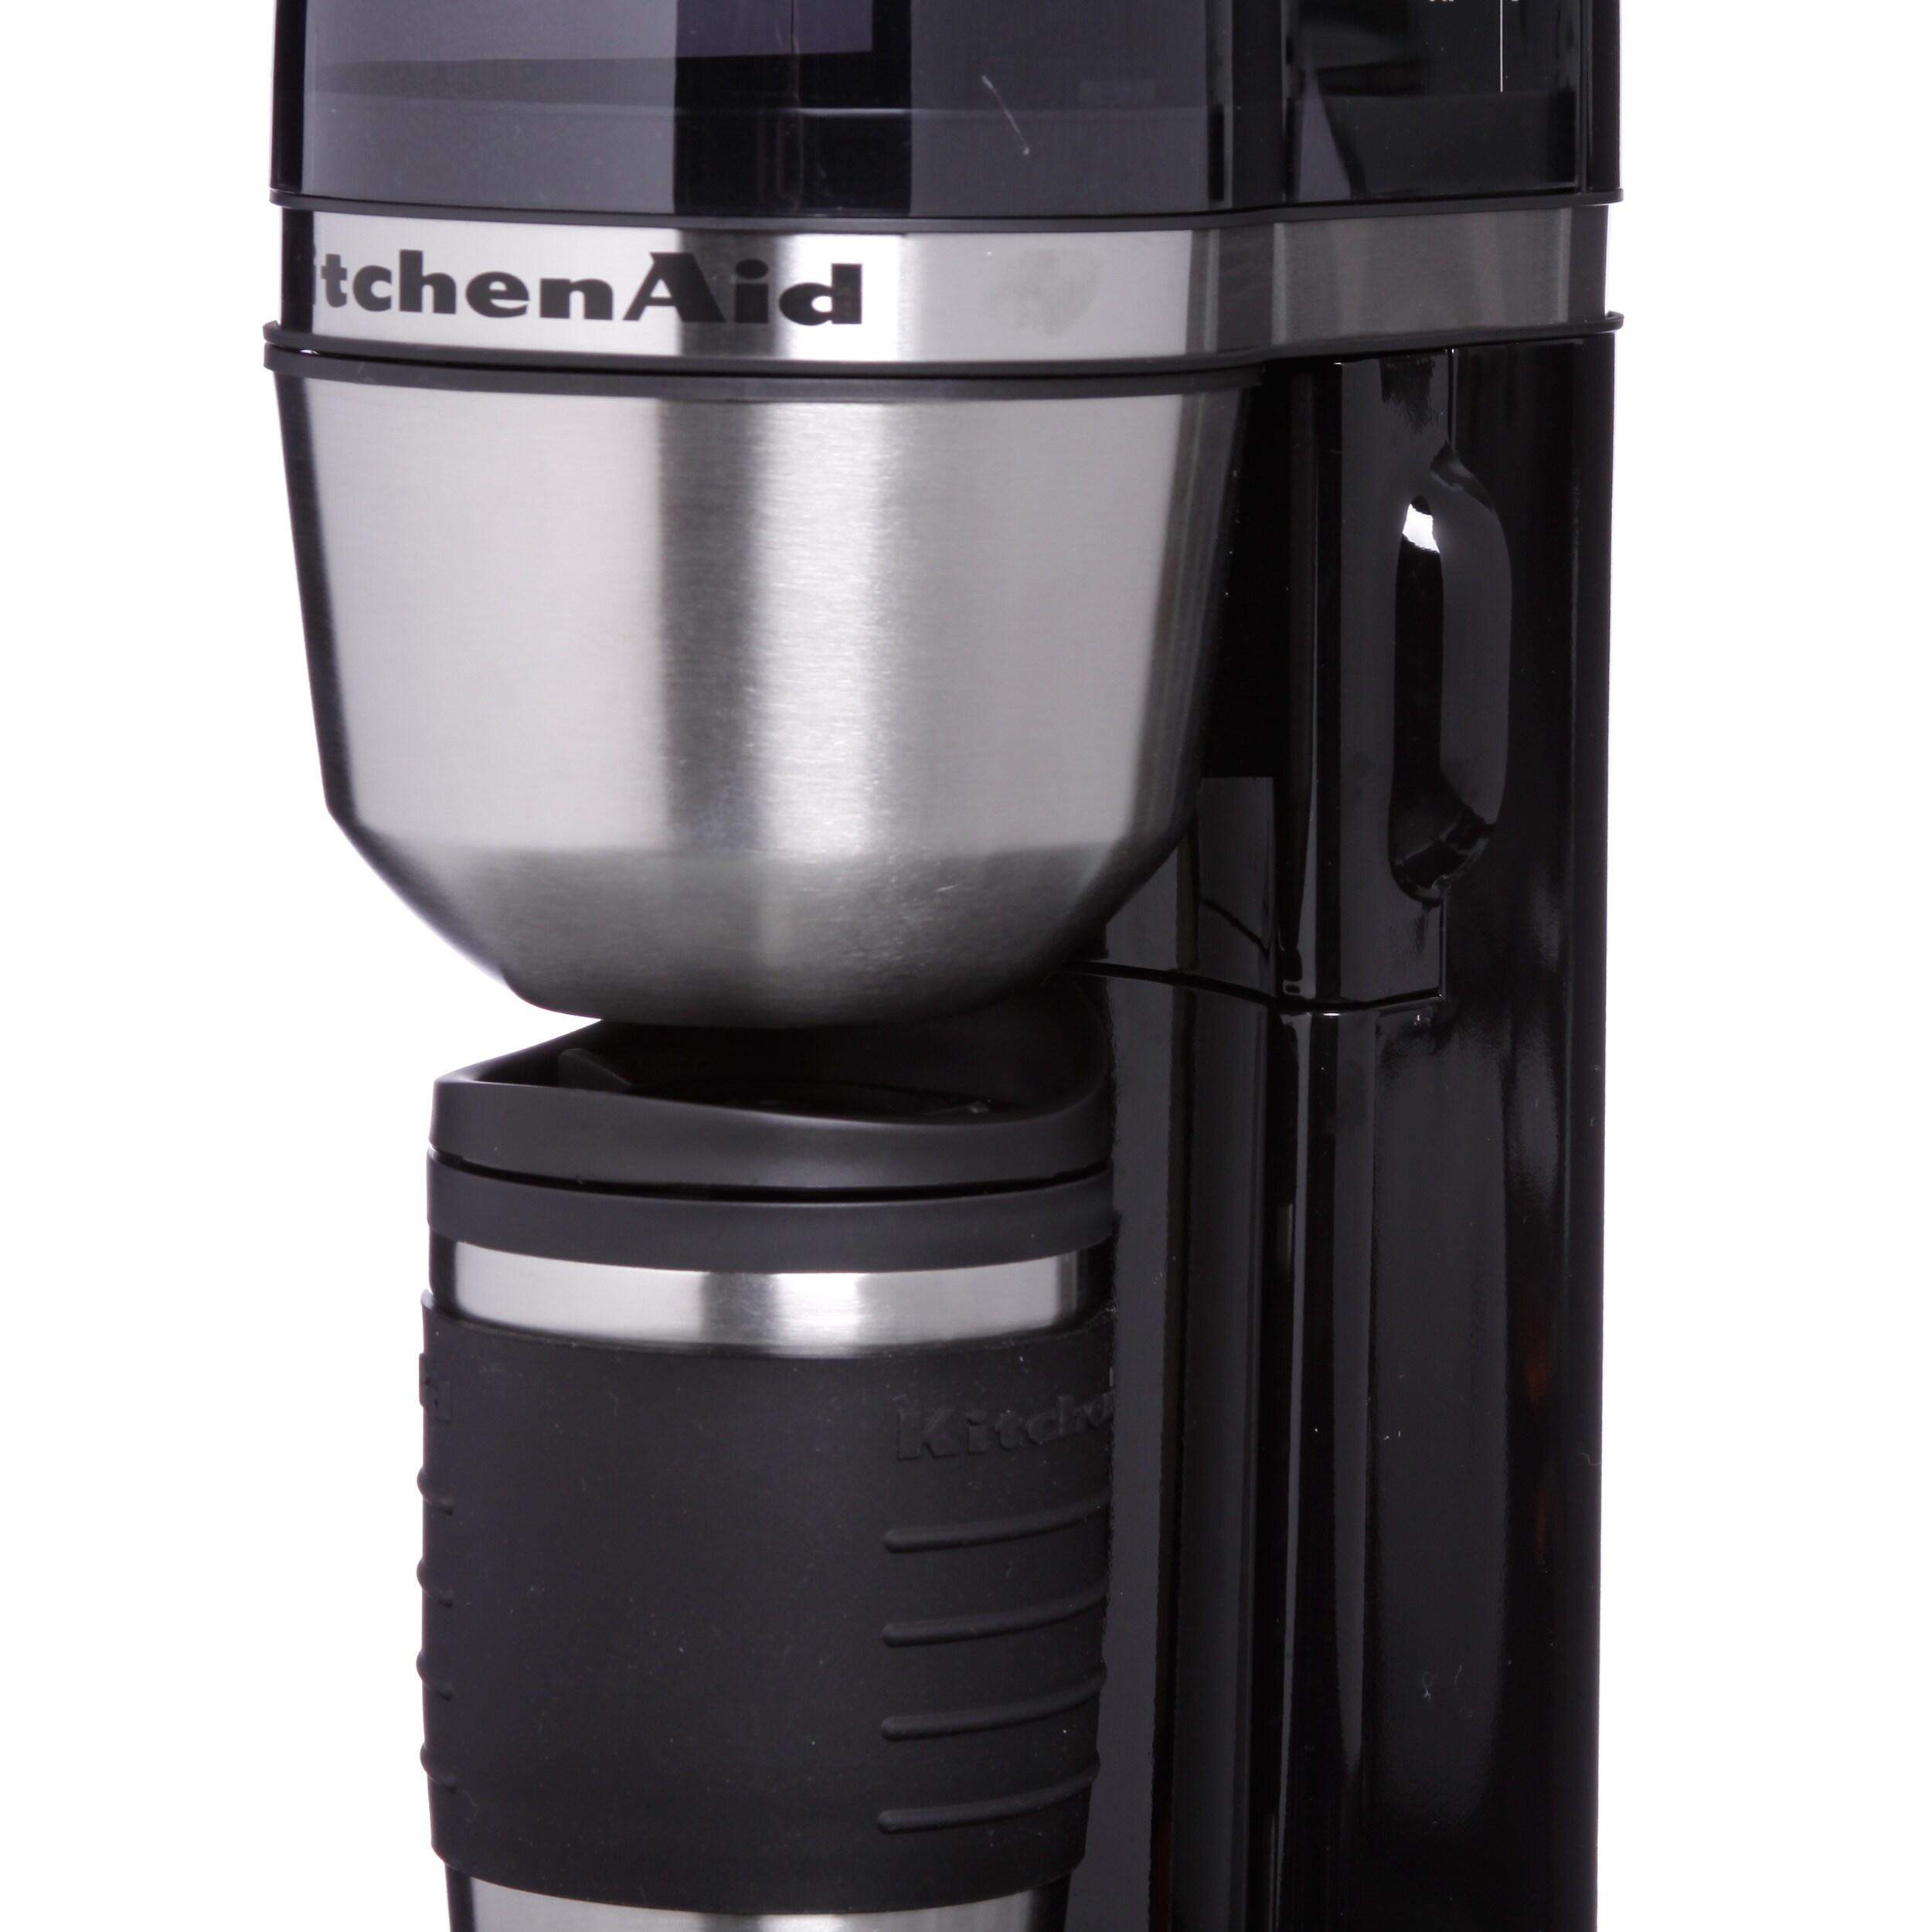 KitchenAid KCM0402ES Espresso Personal Coffee Maker with Optimized